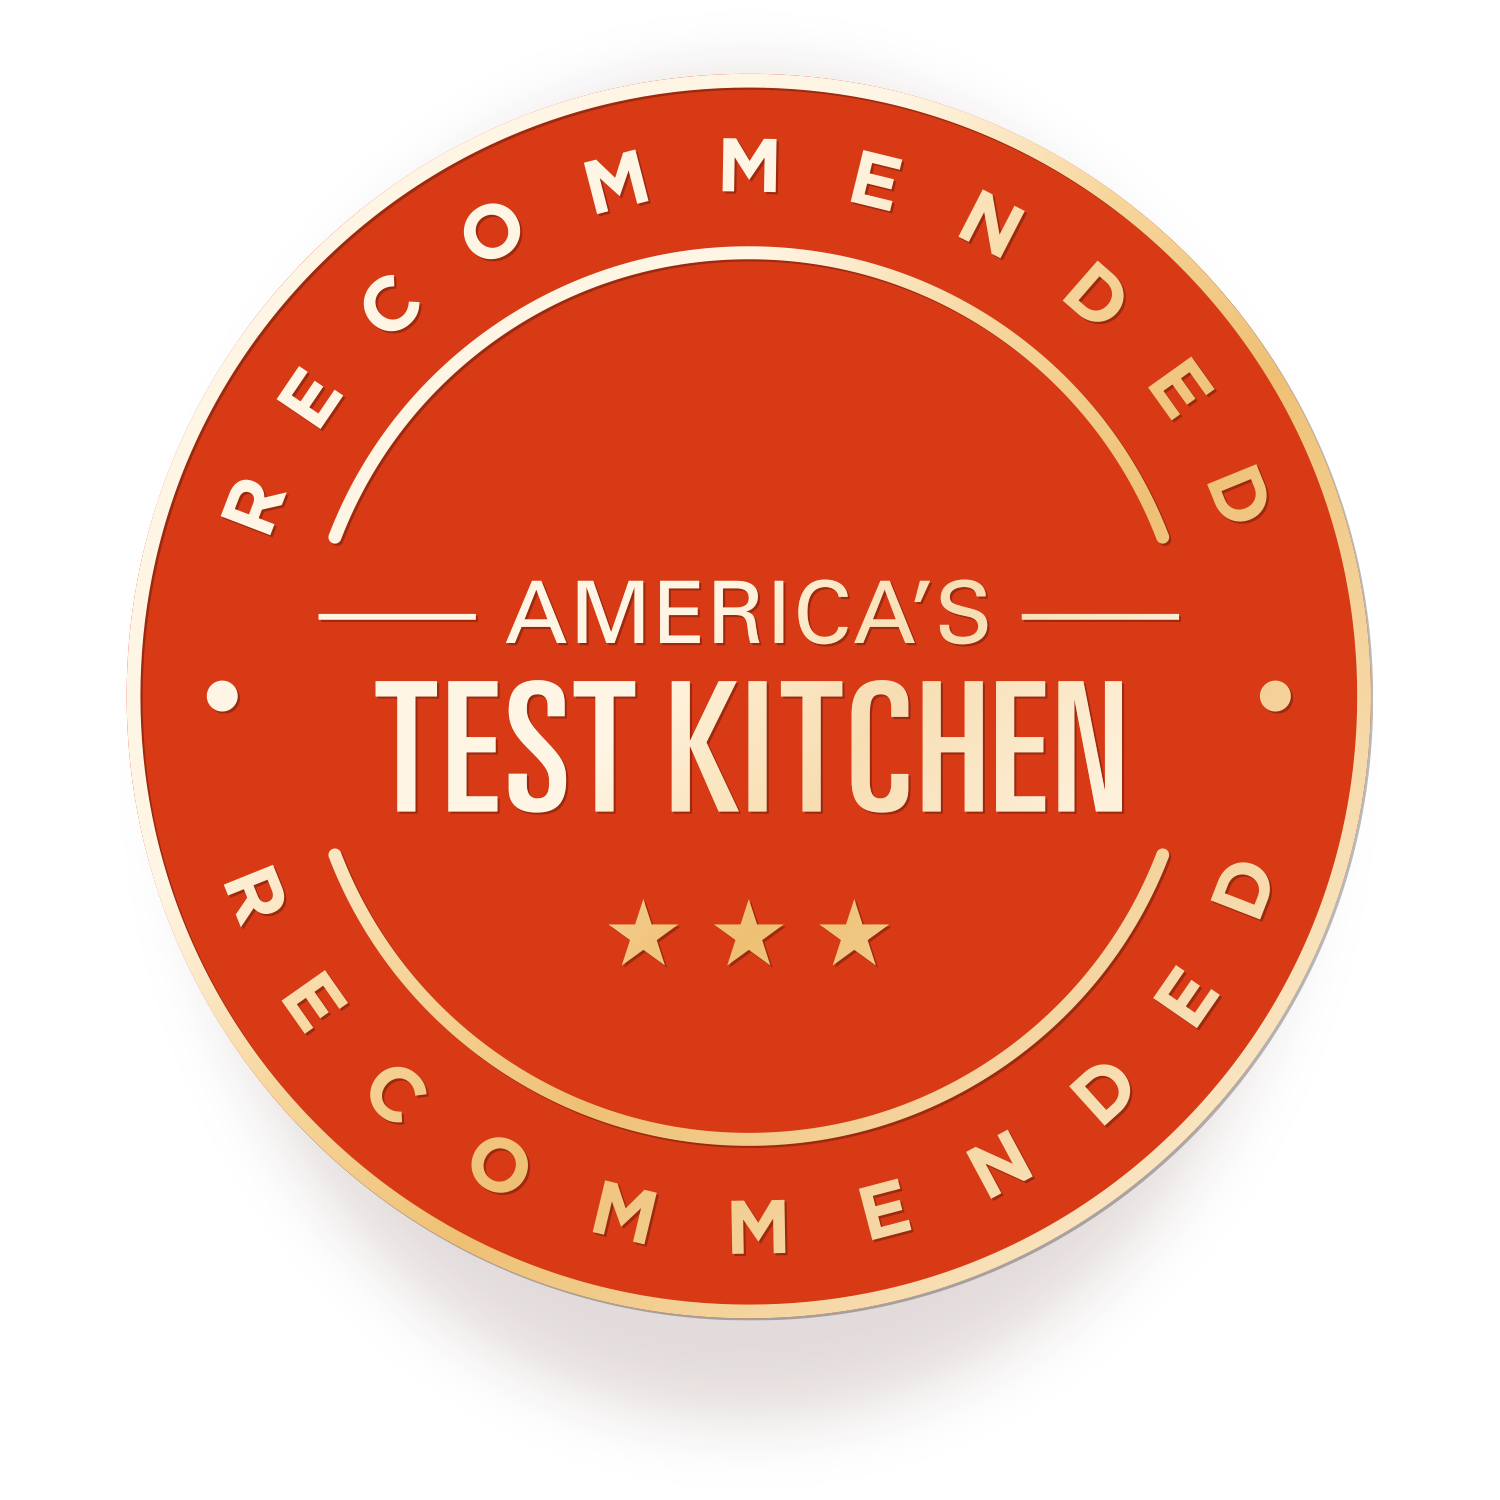 America's Test Kitchen Badge